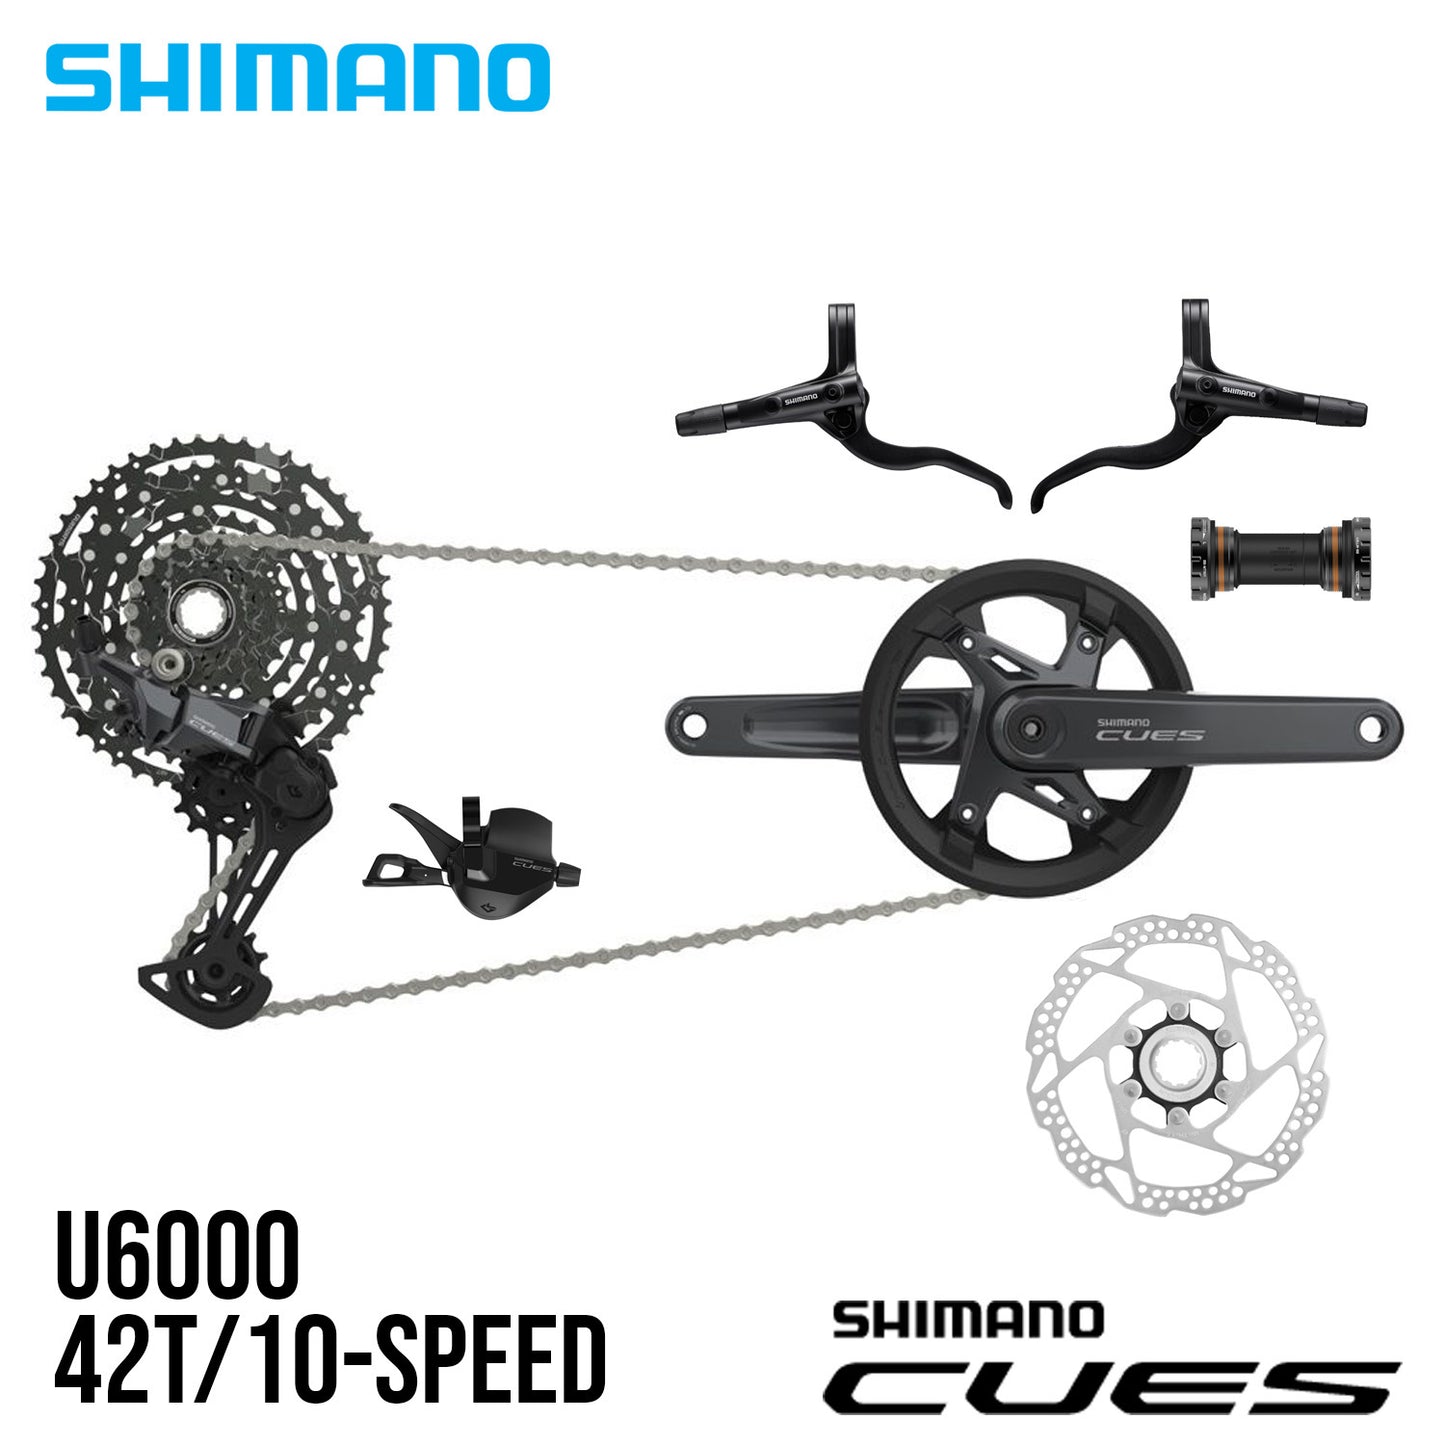 Shimano Cues U6000 1x10 10-Speed Groupset